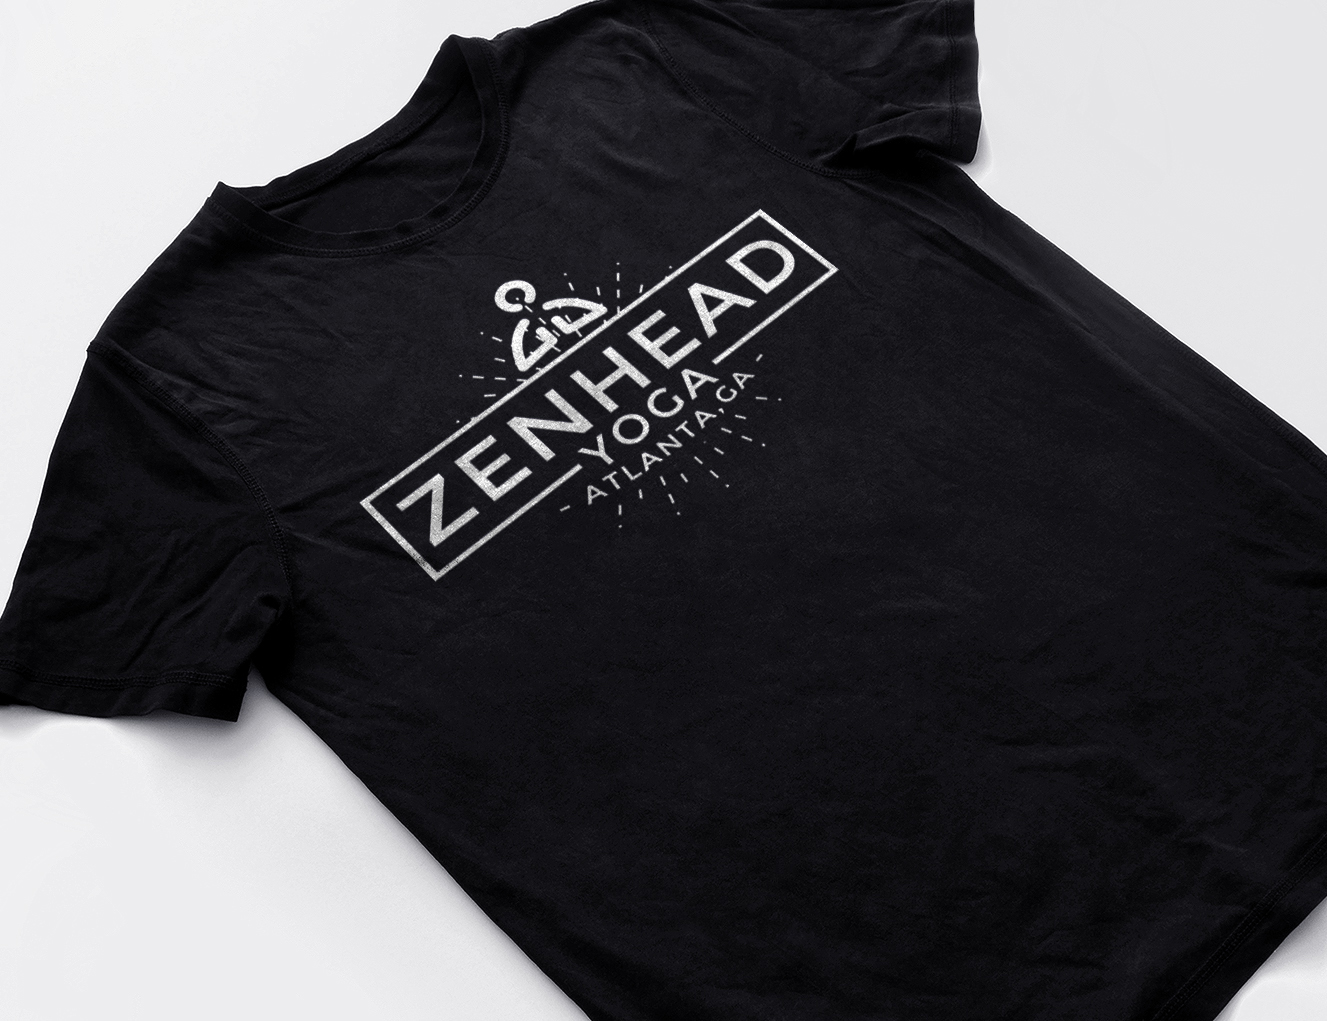 Zenhead yoga studio logo on black t-shirt